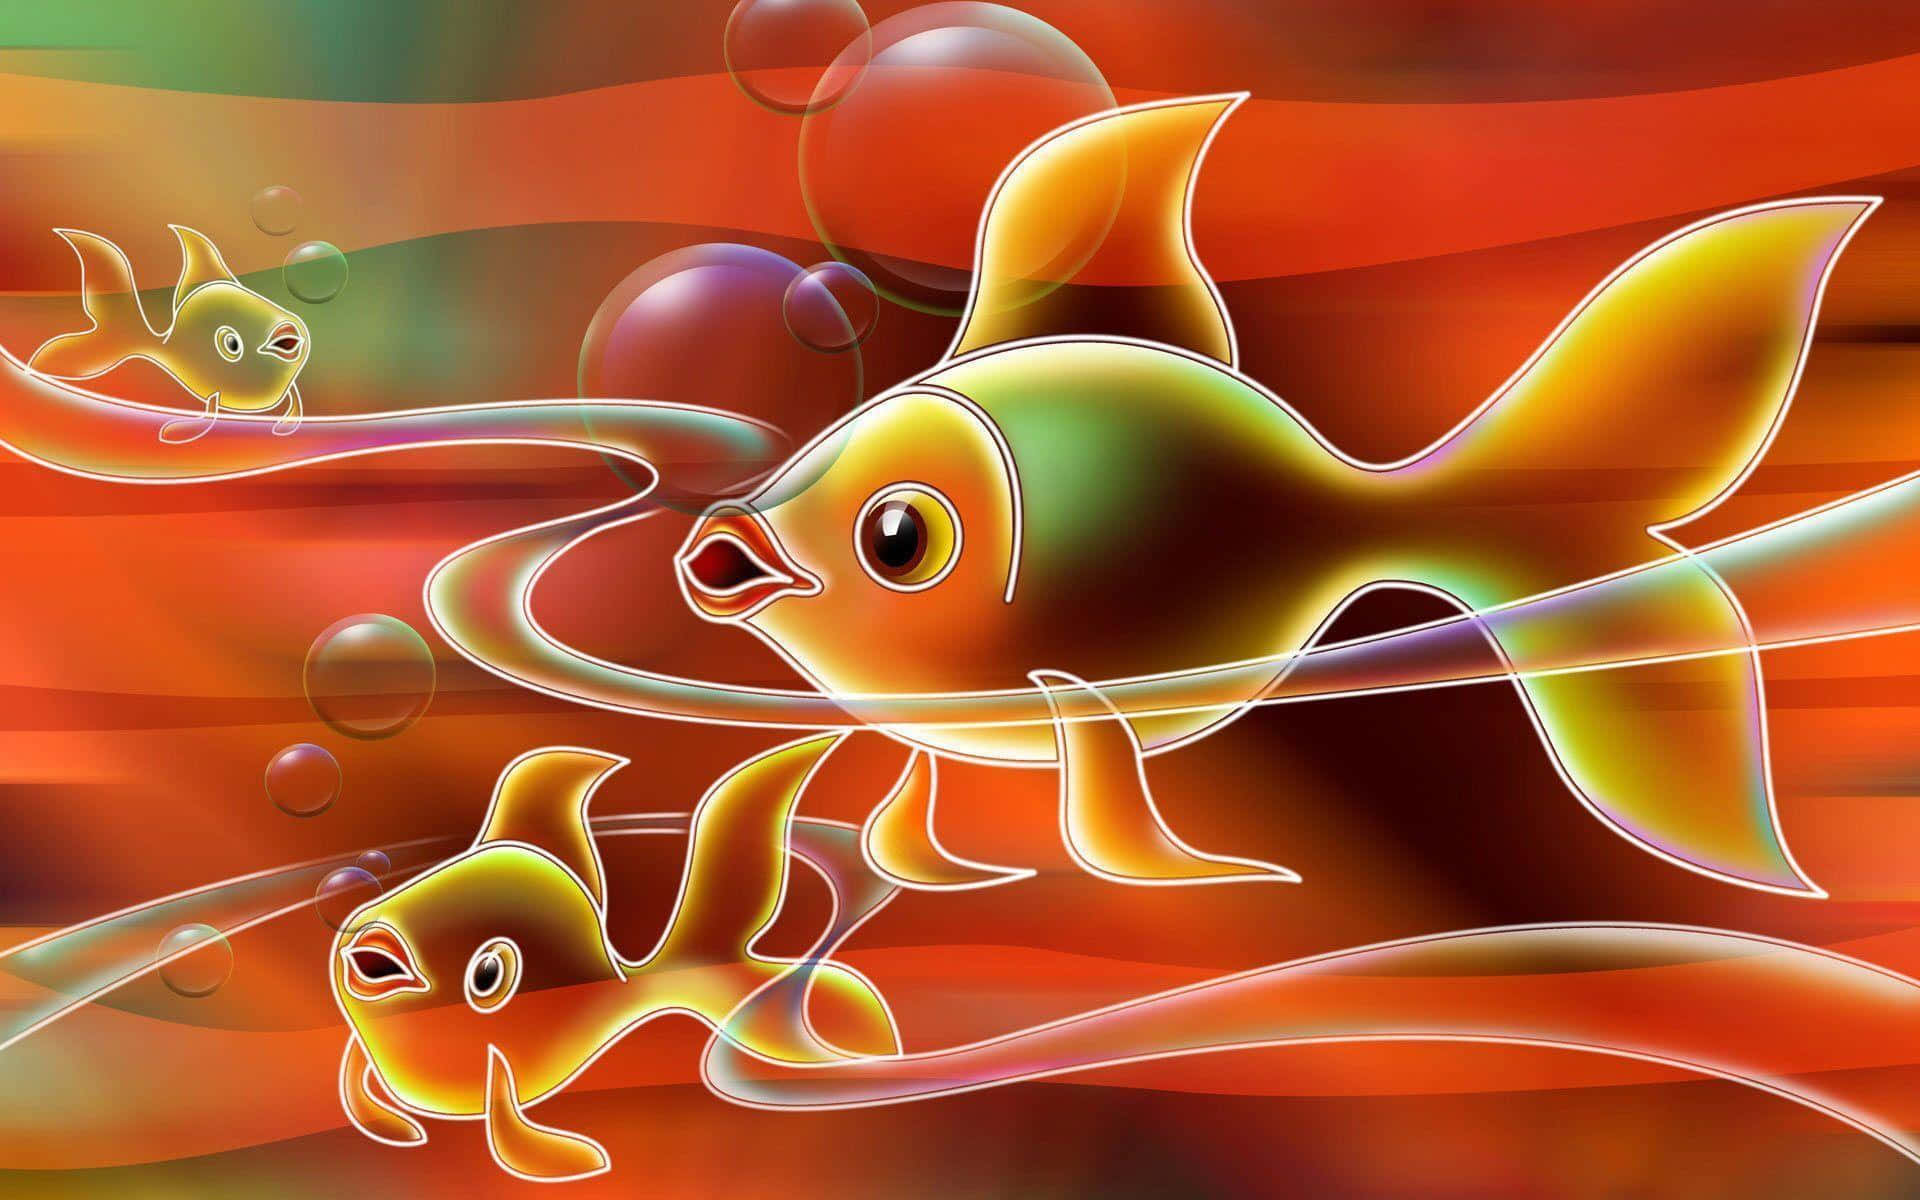 "A close-up of a vibrant goldfish"